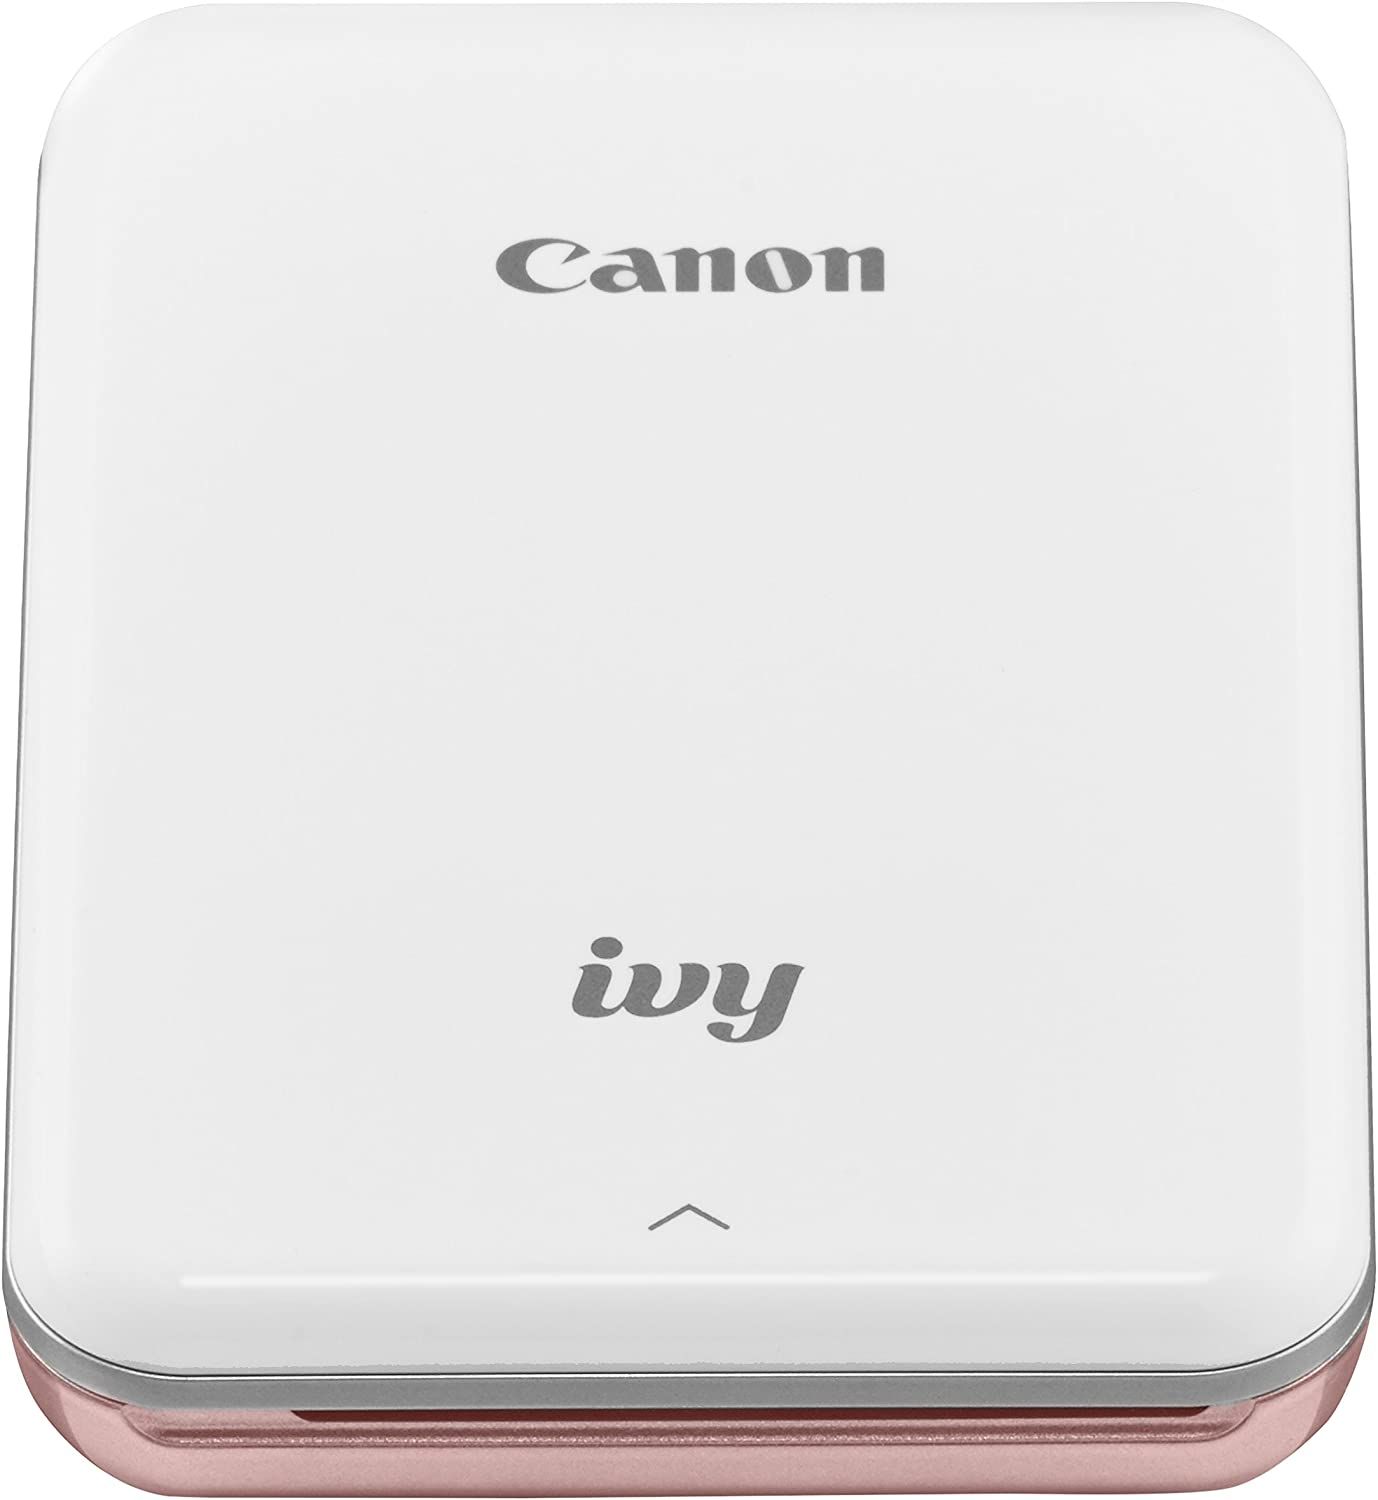 Canon IVY Mini Photo Printer 2